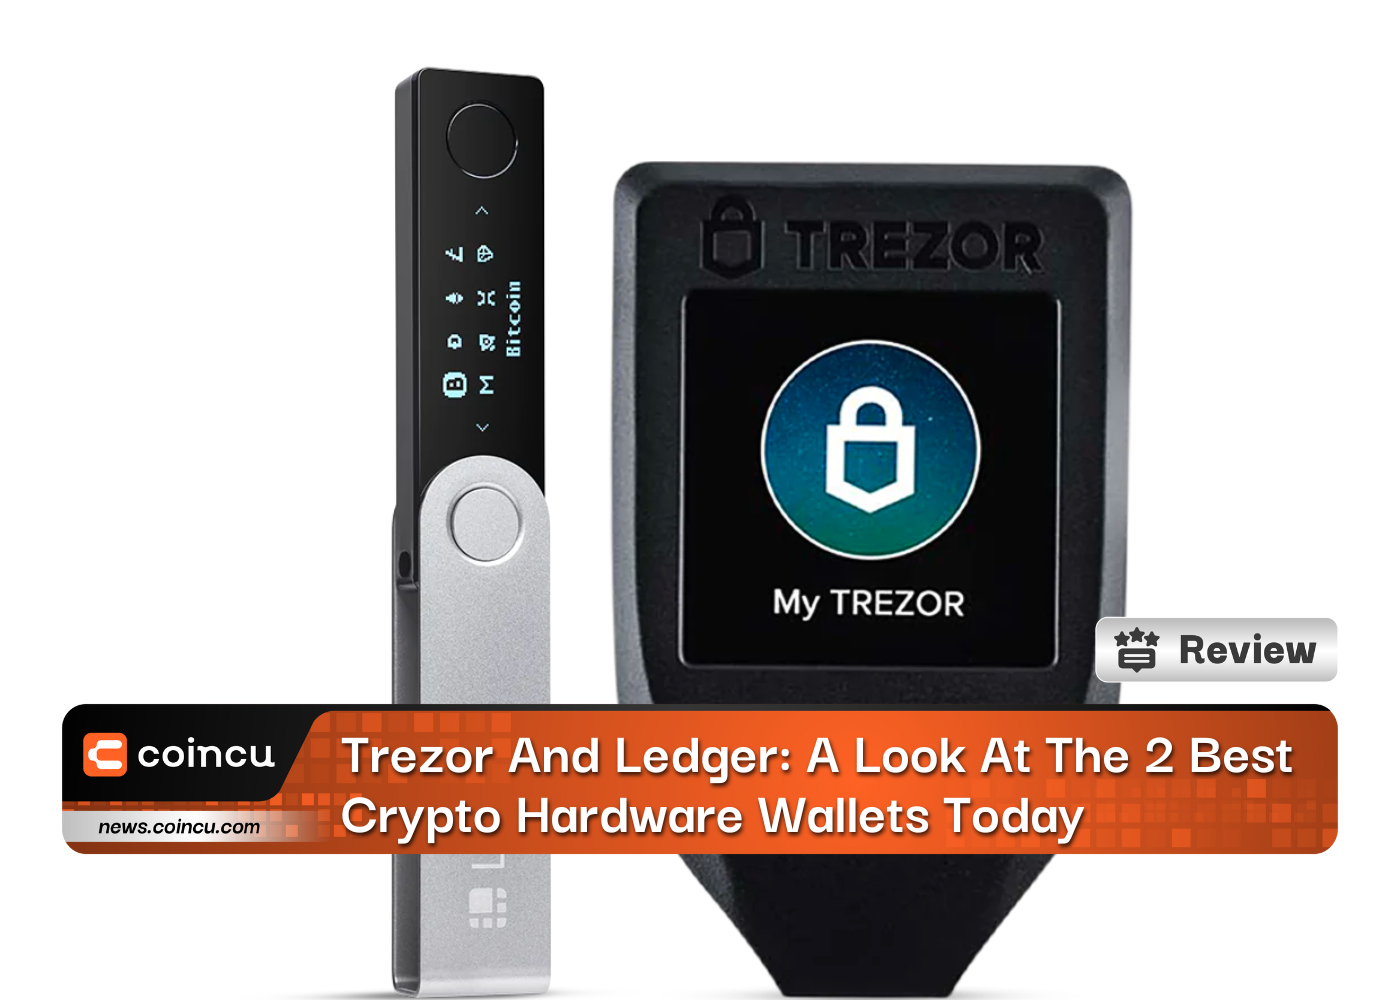 TREZOR Review - The Original Bitcoin Hardware Wallet